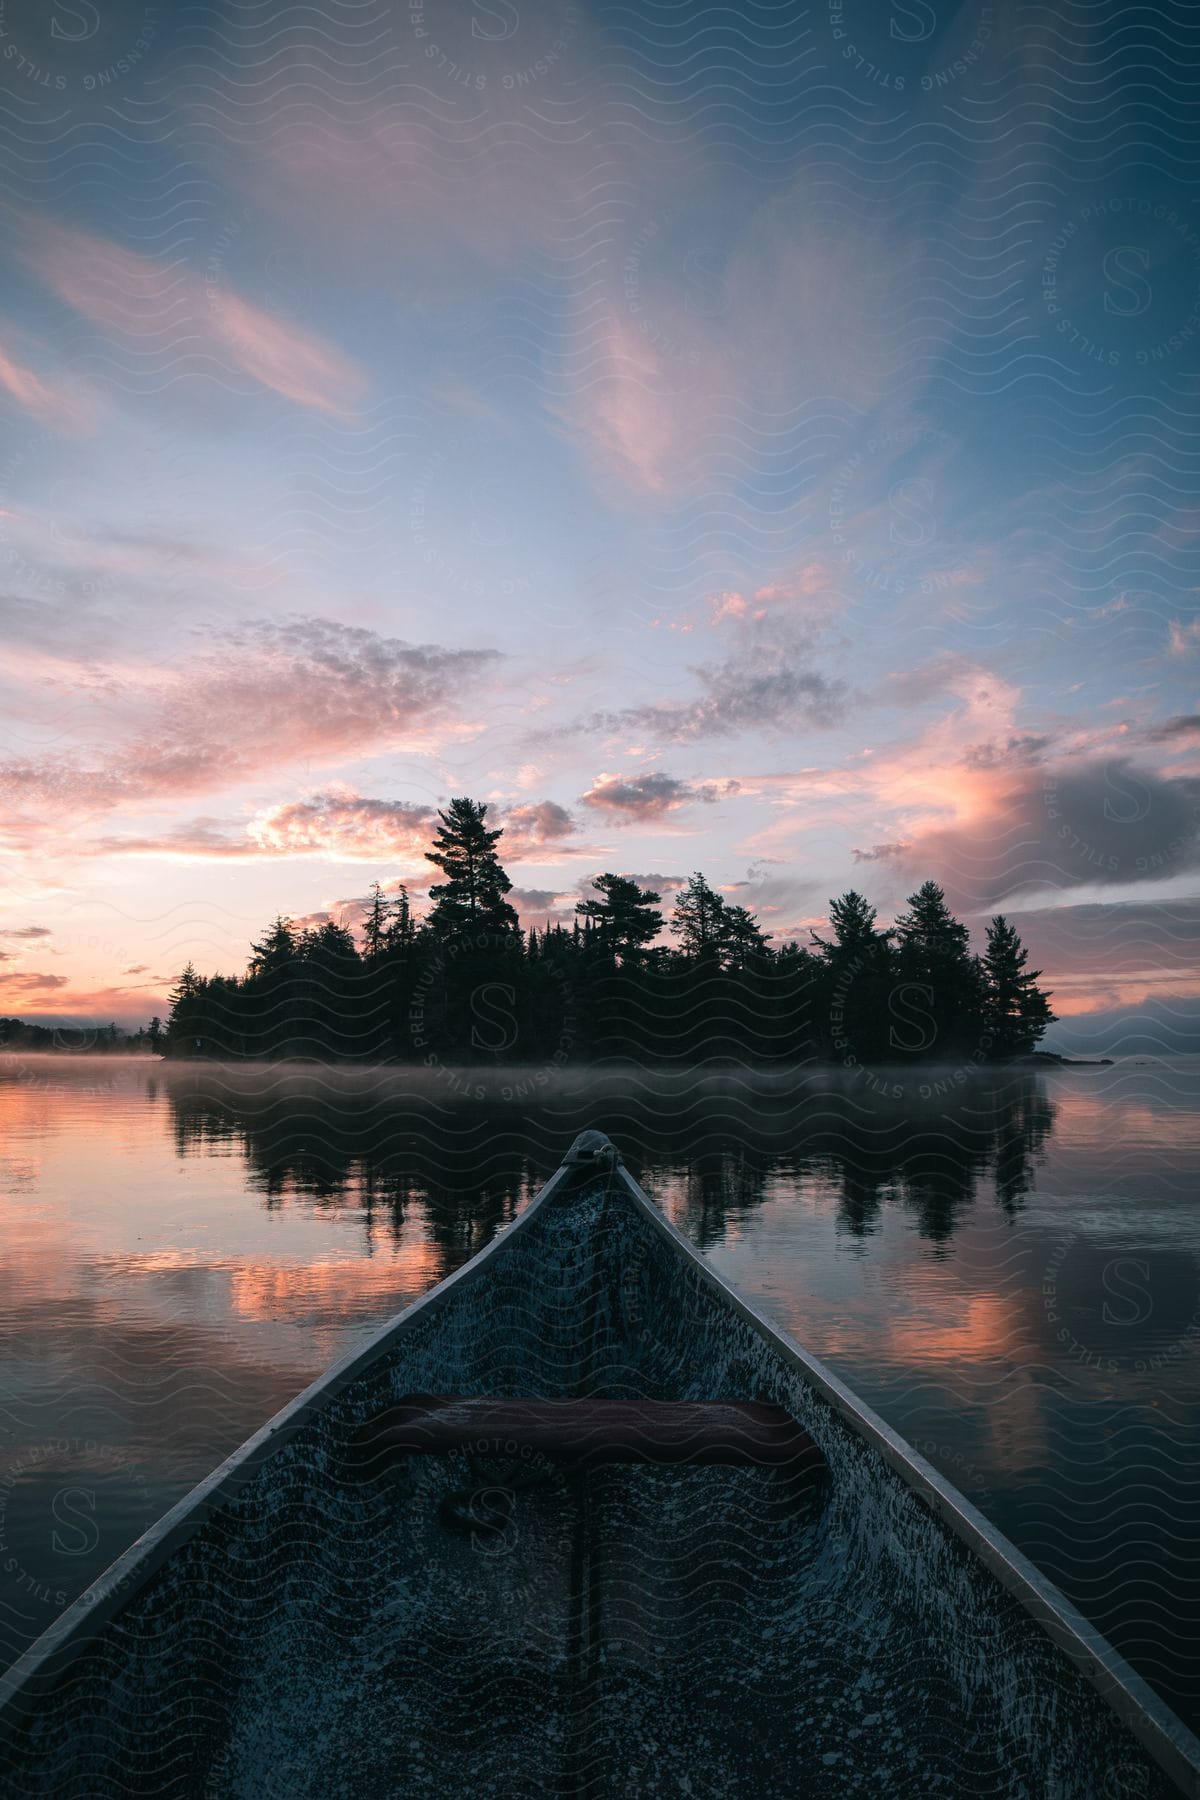 Bow of a canoe sailing towards a wooded island under a reddish dawn sky.